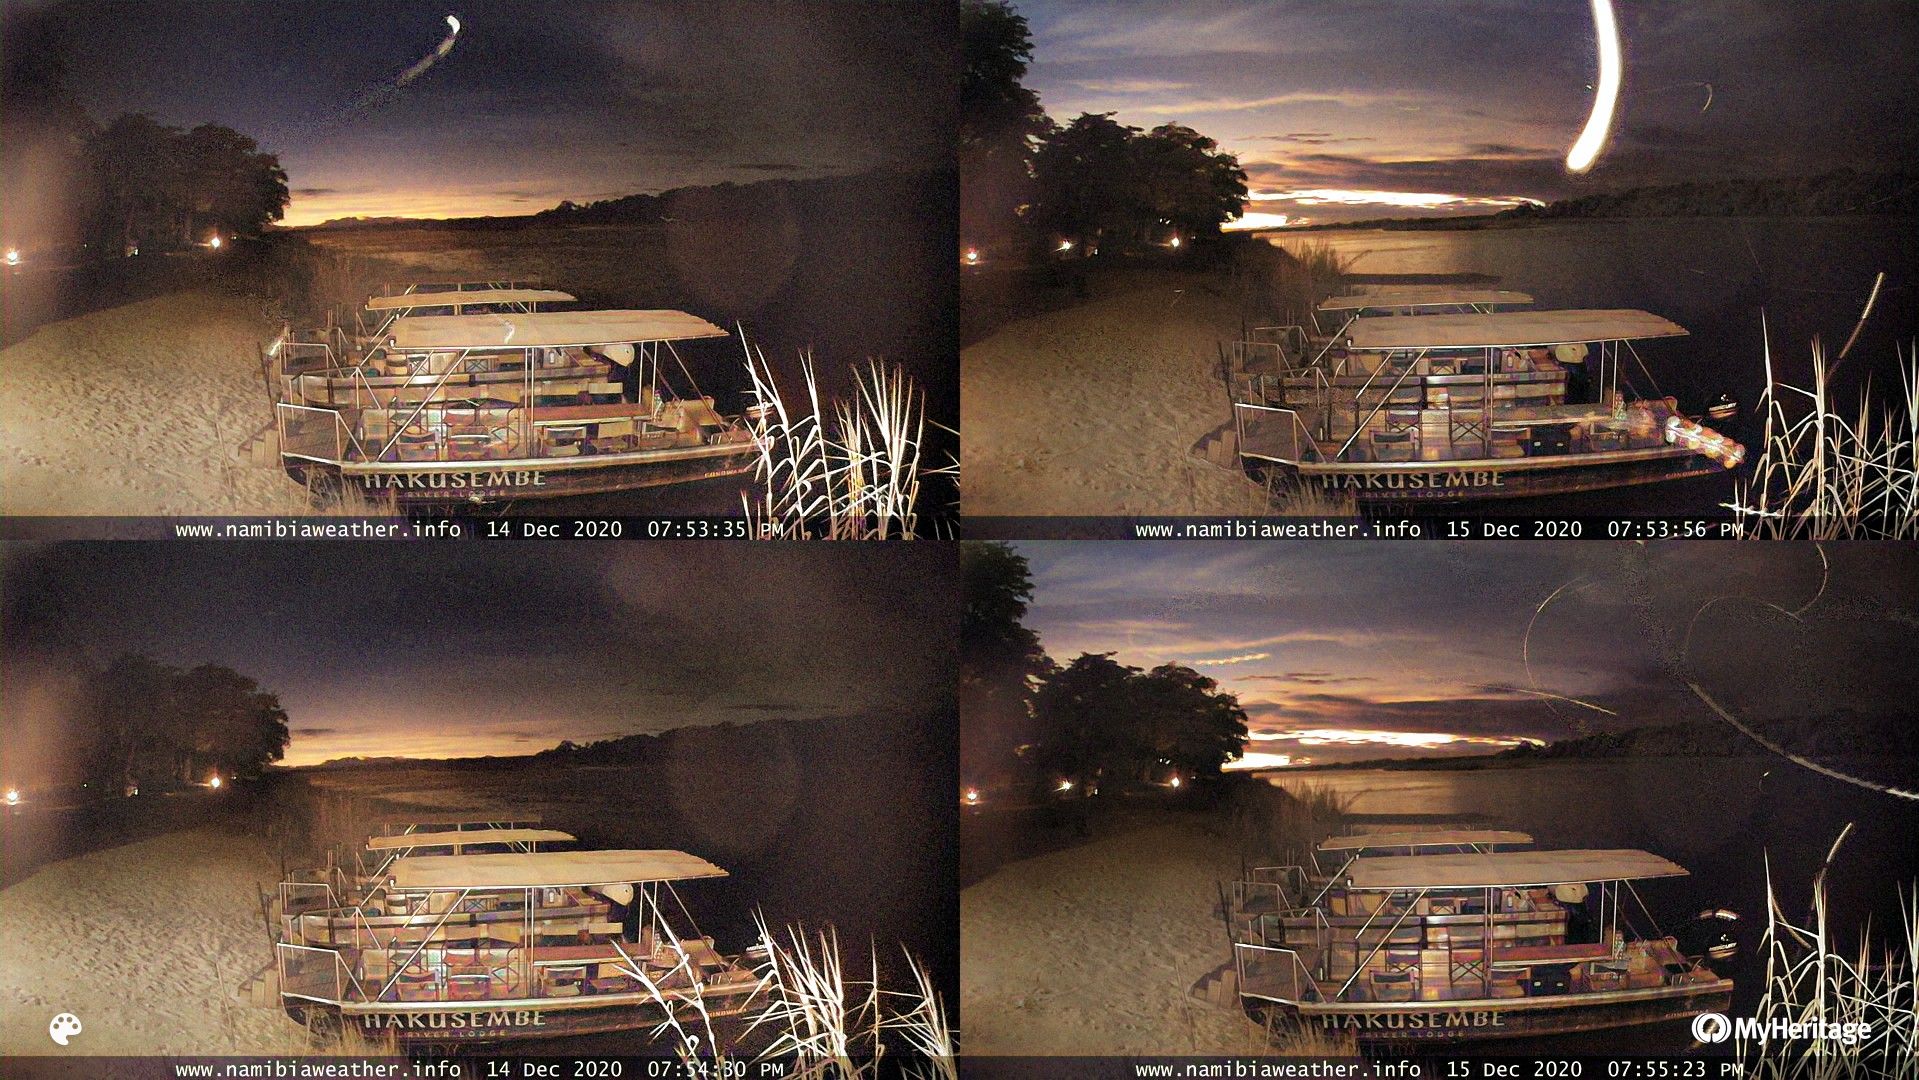 Hakusembe River Lodge webcam solar eclipse below the horizon 2020 3